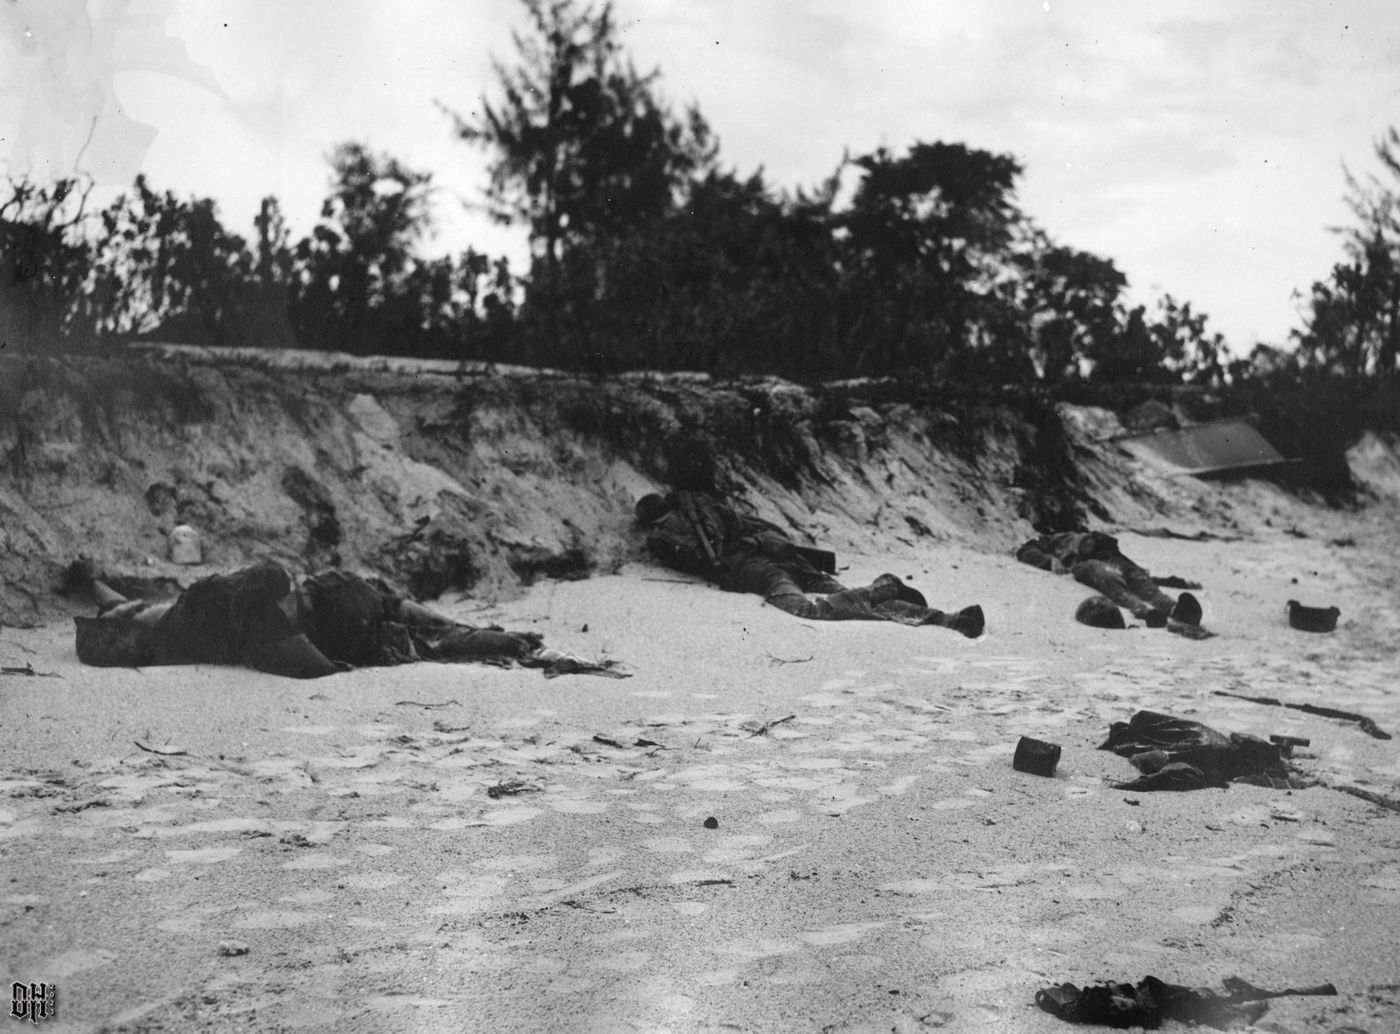 DH - Dead US Soldiers 30 - The bodies of three deceased American soldiers lie on a beach.jpg